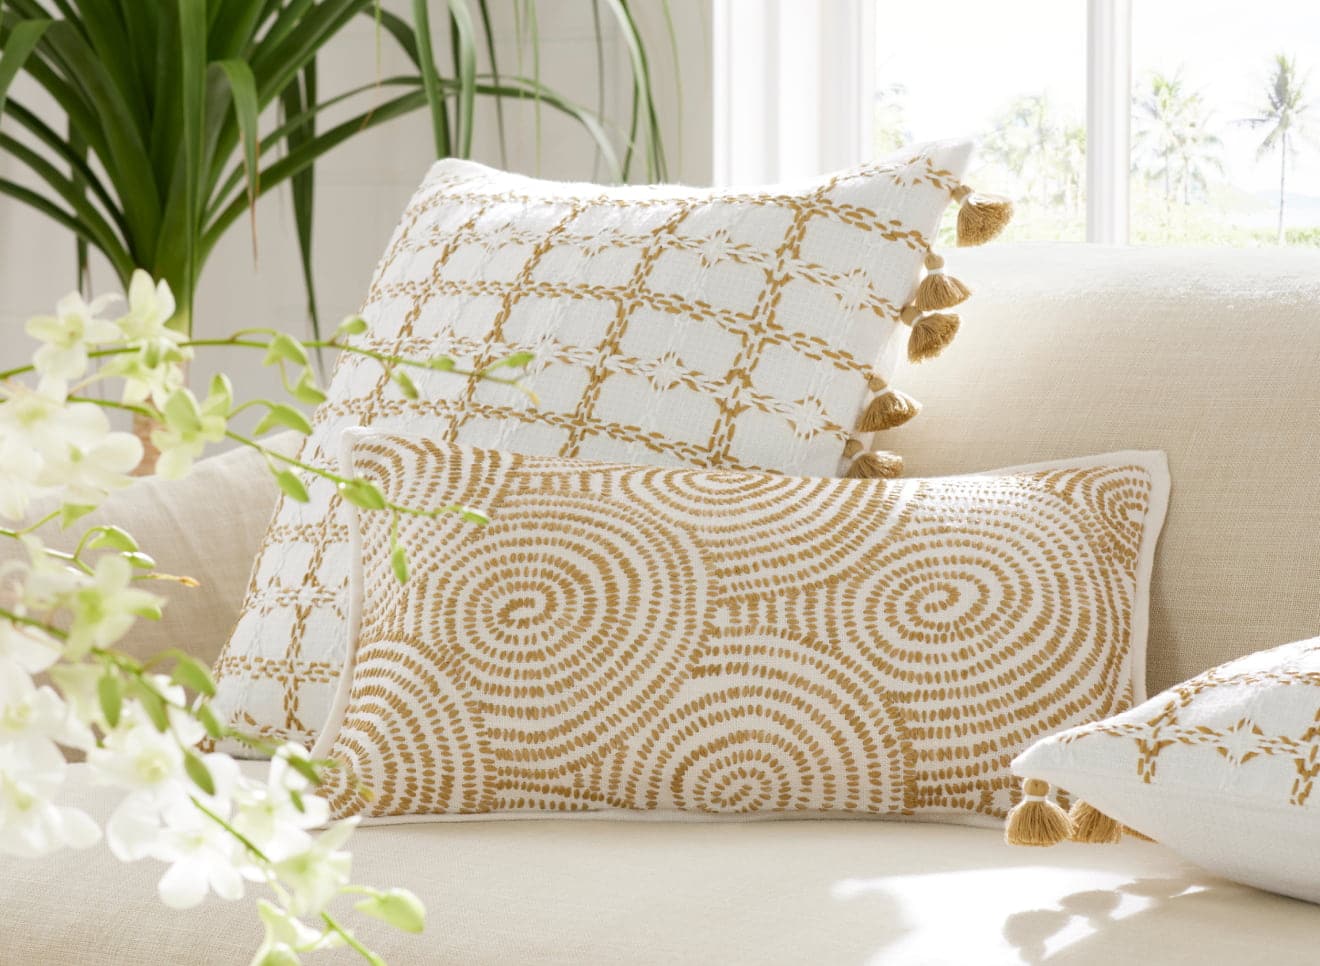  Pillows from Serena & Lily ready to ship - decor - home decor - interior decor - living room decor - bedroom decor